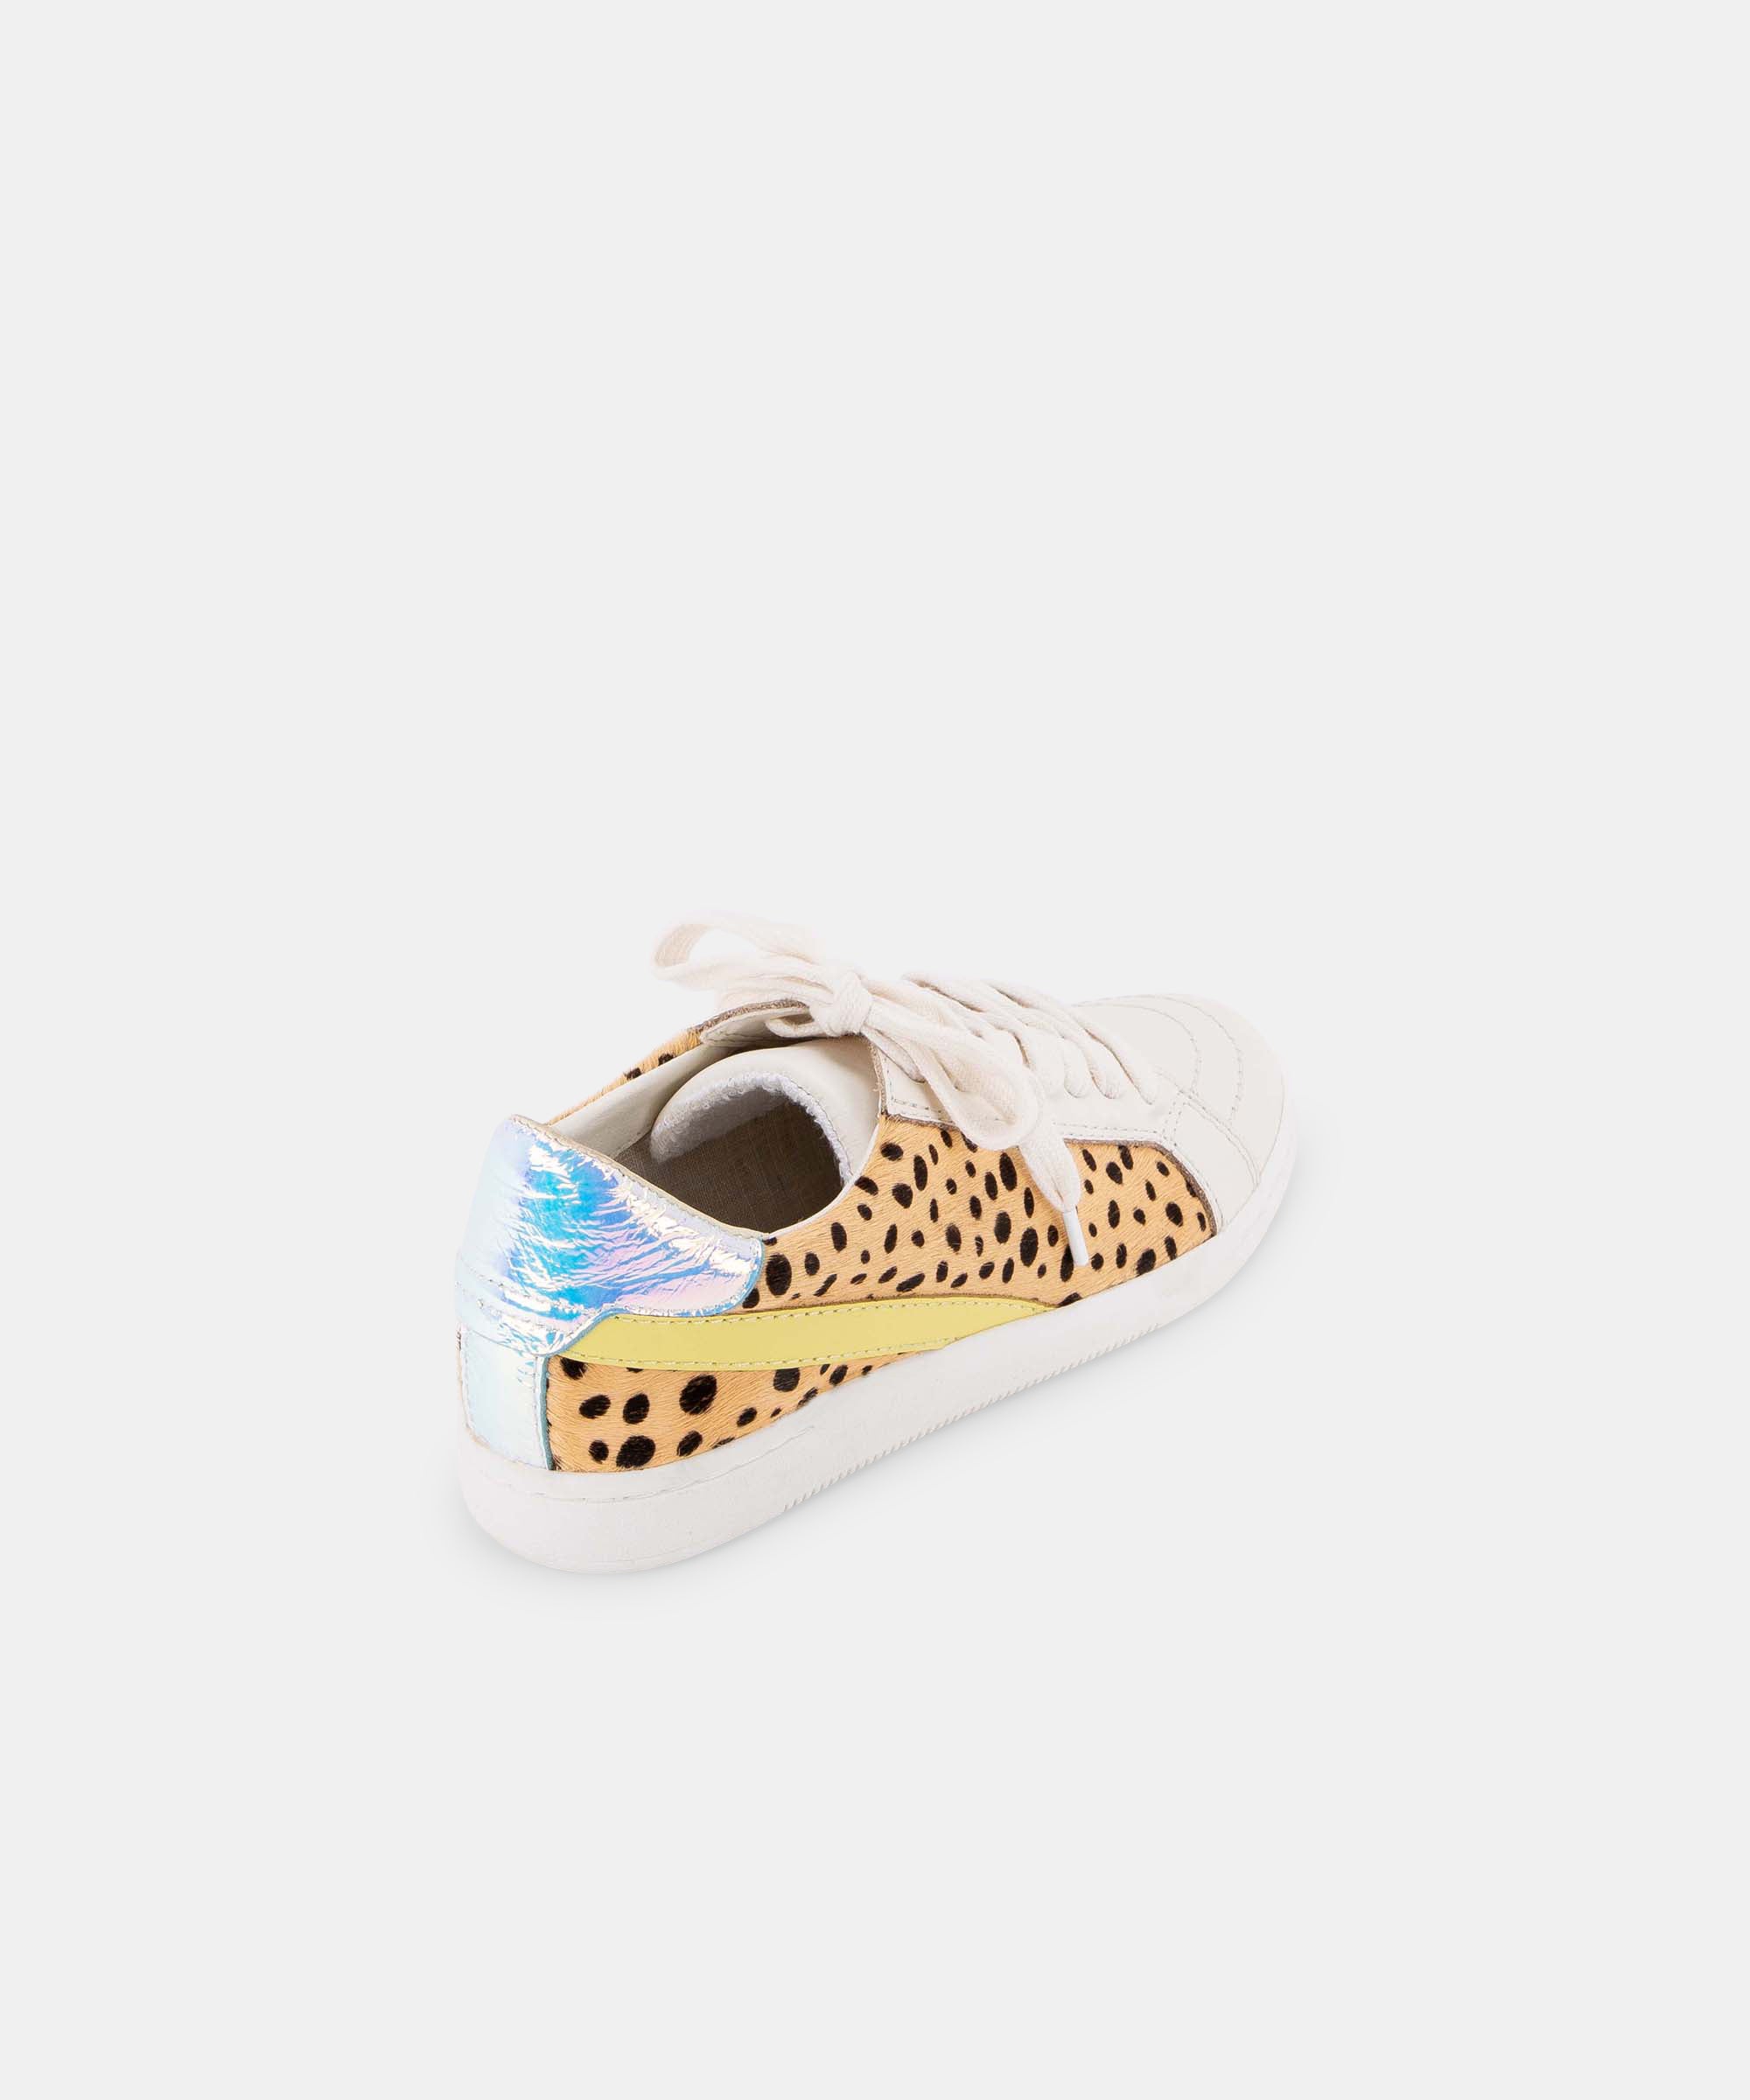 dolce vita nino sneakers leopard